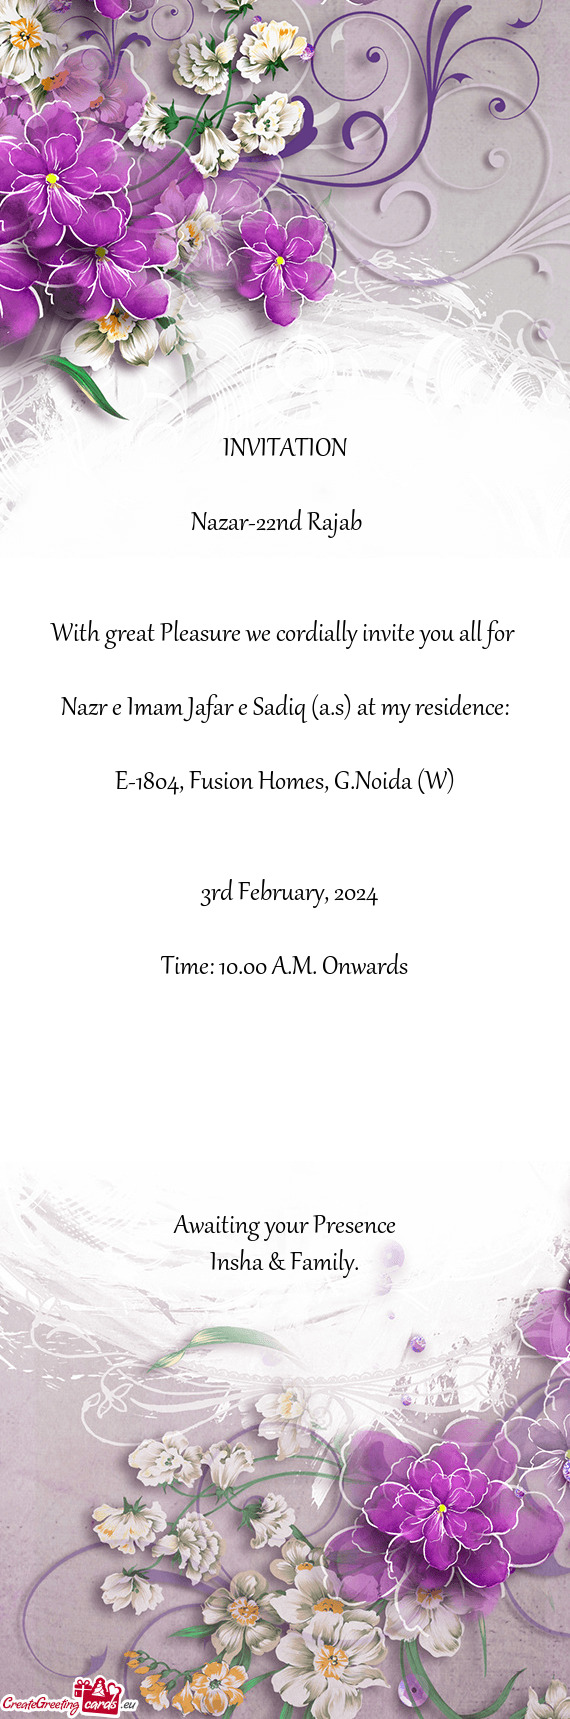 E-1804, Fusion Homes, G.Noida (W)